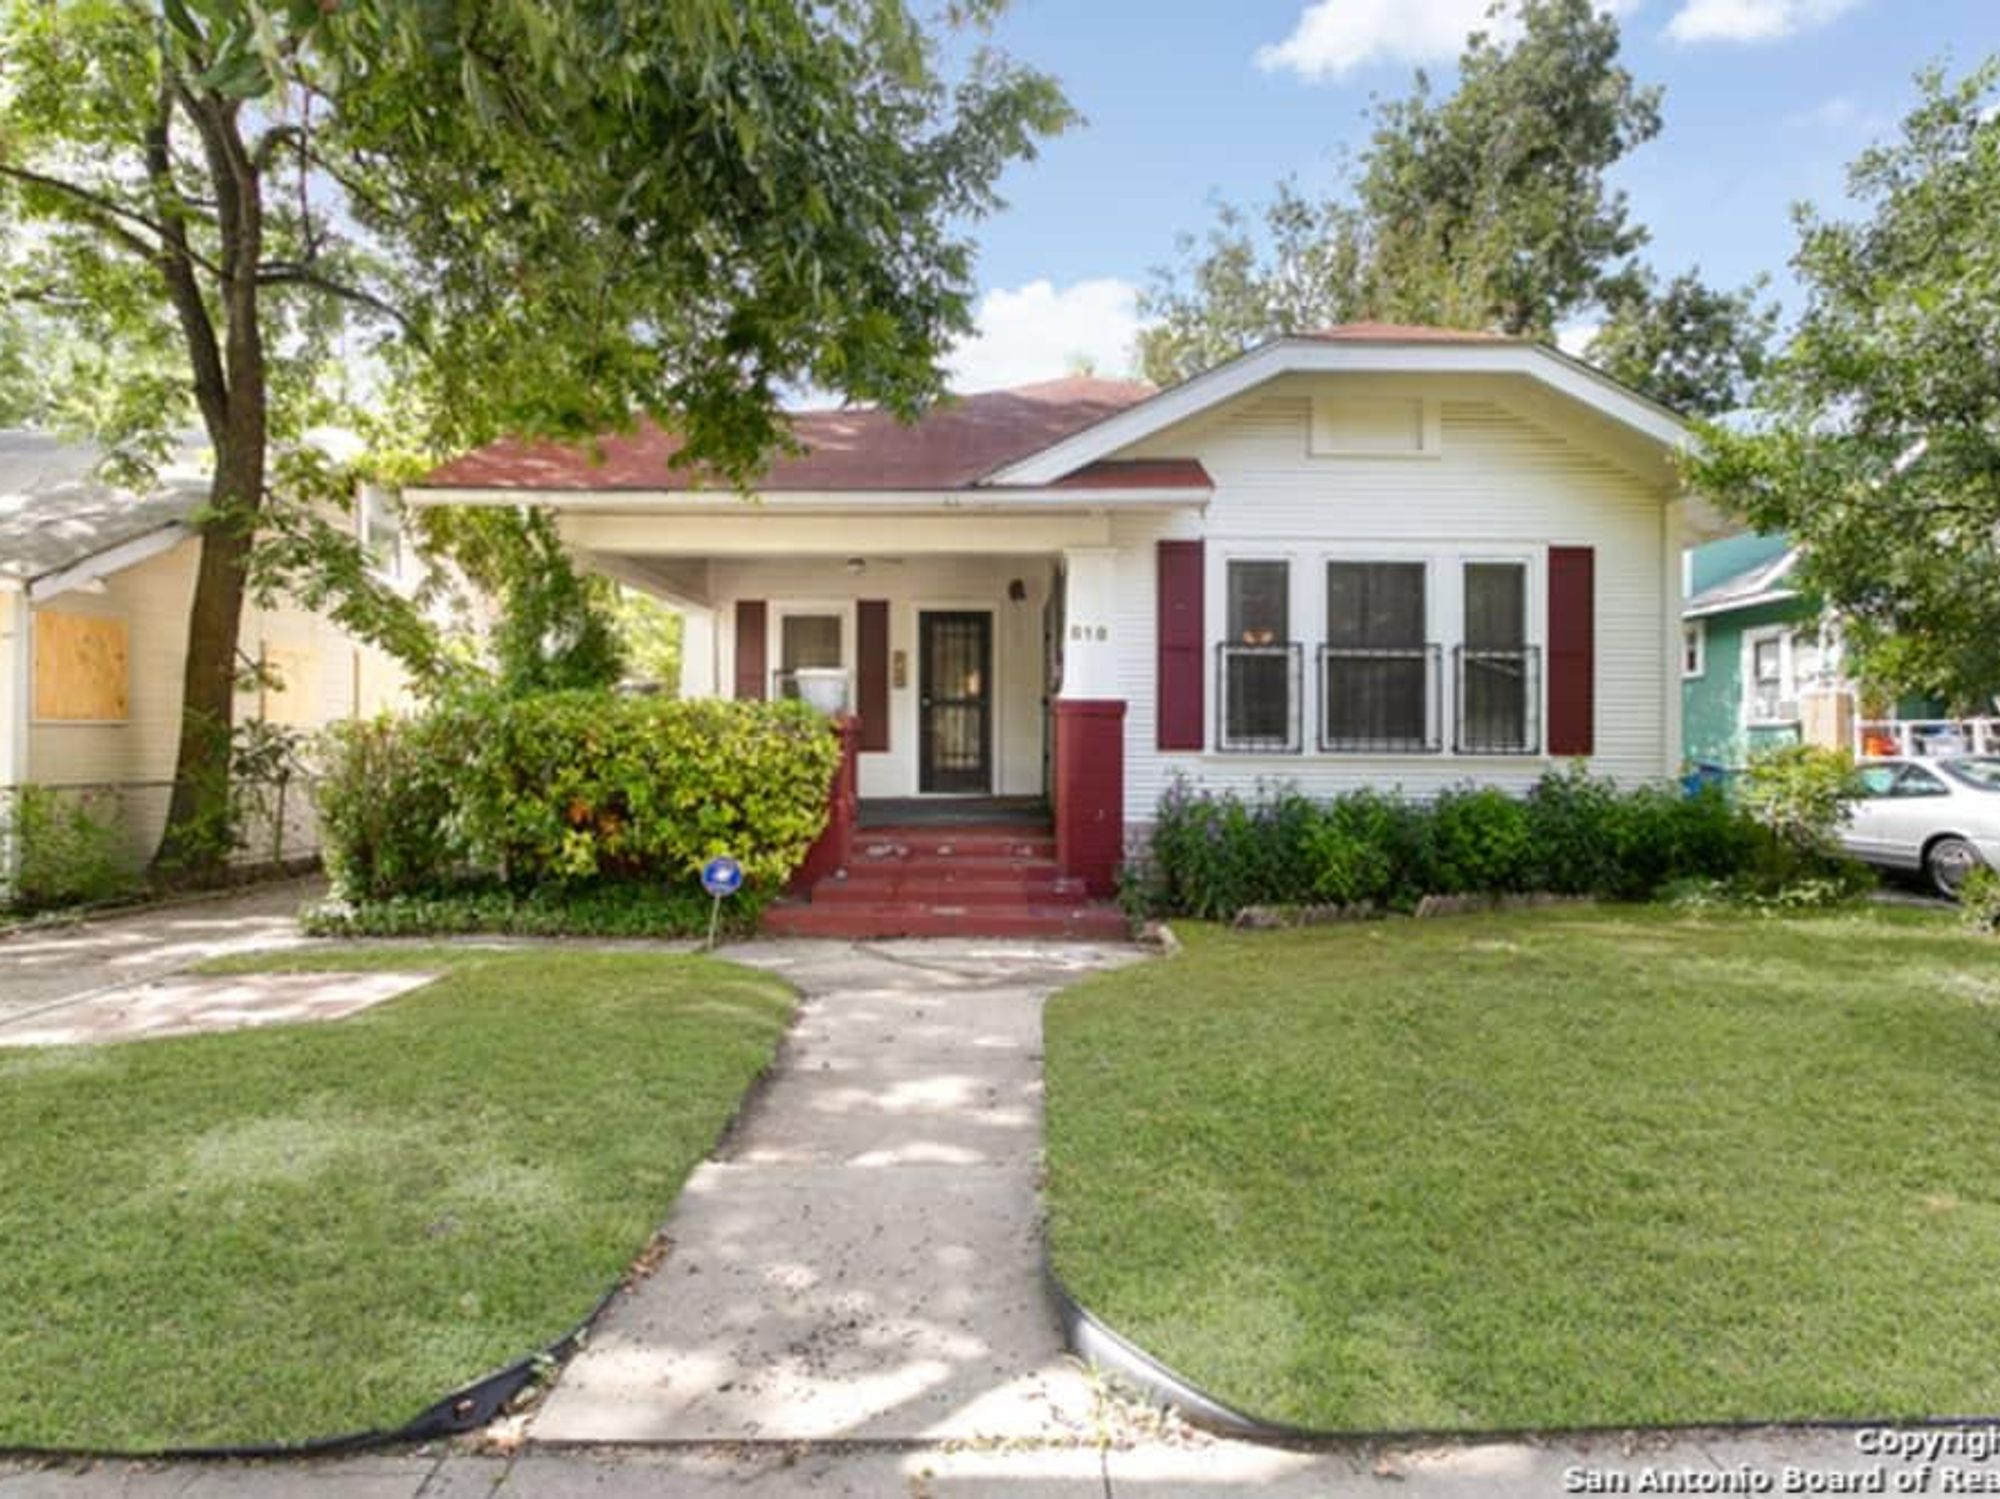 San Antonio house for sale